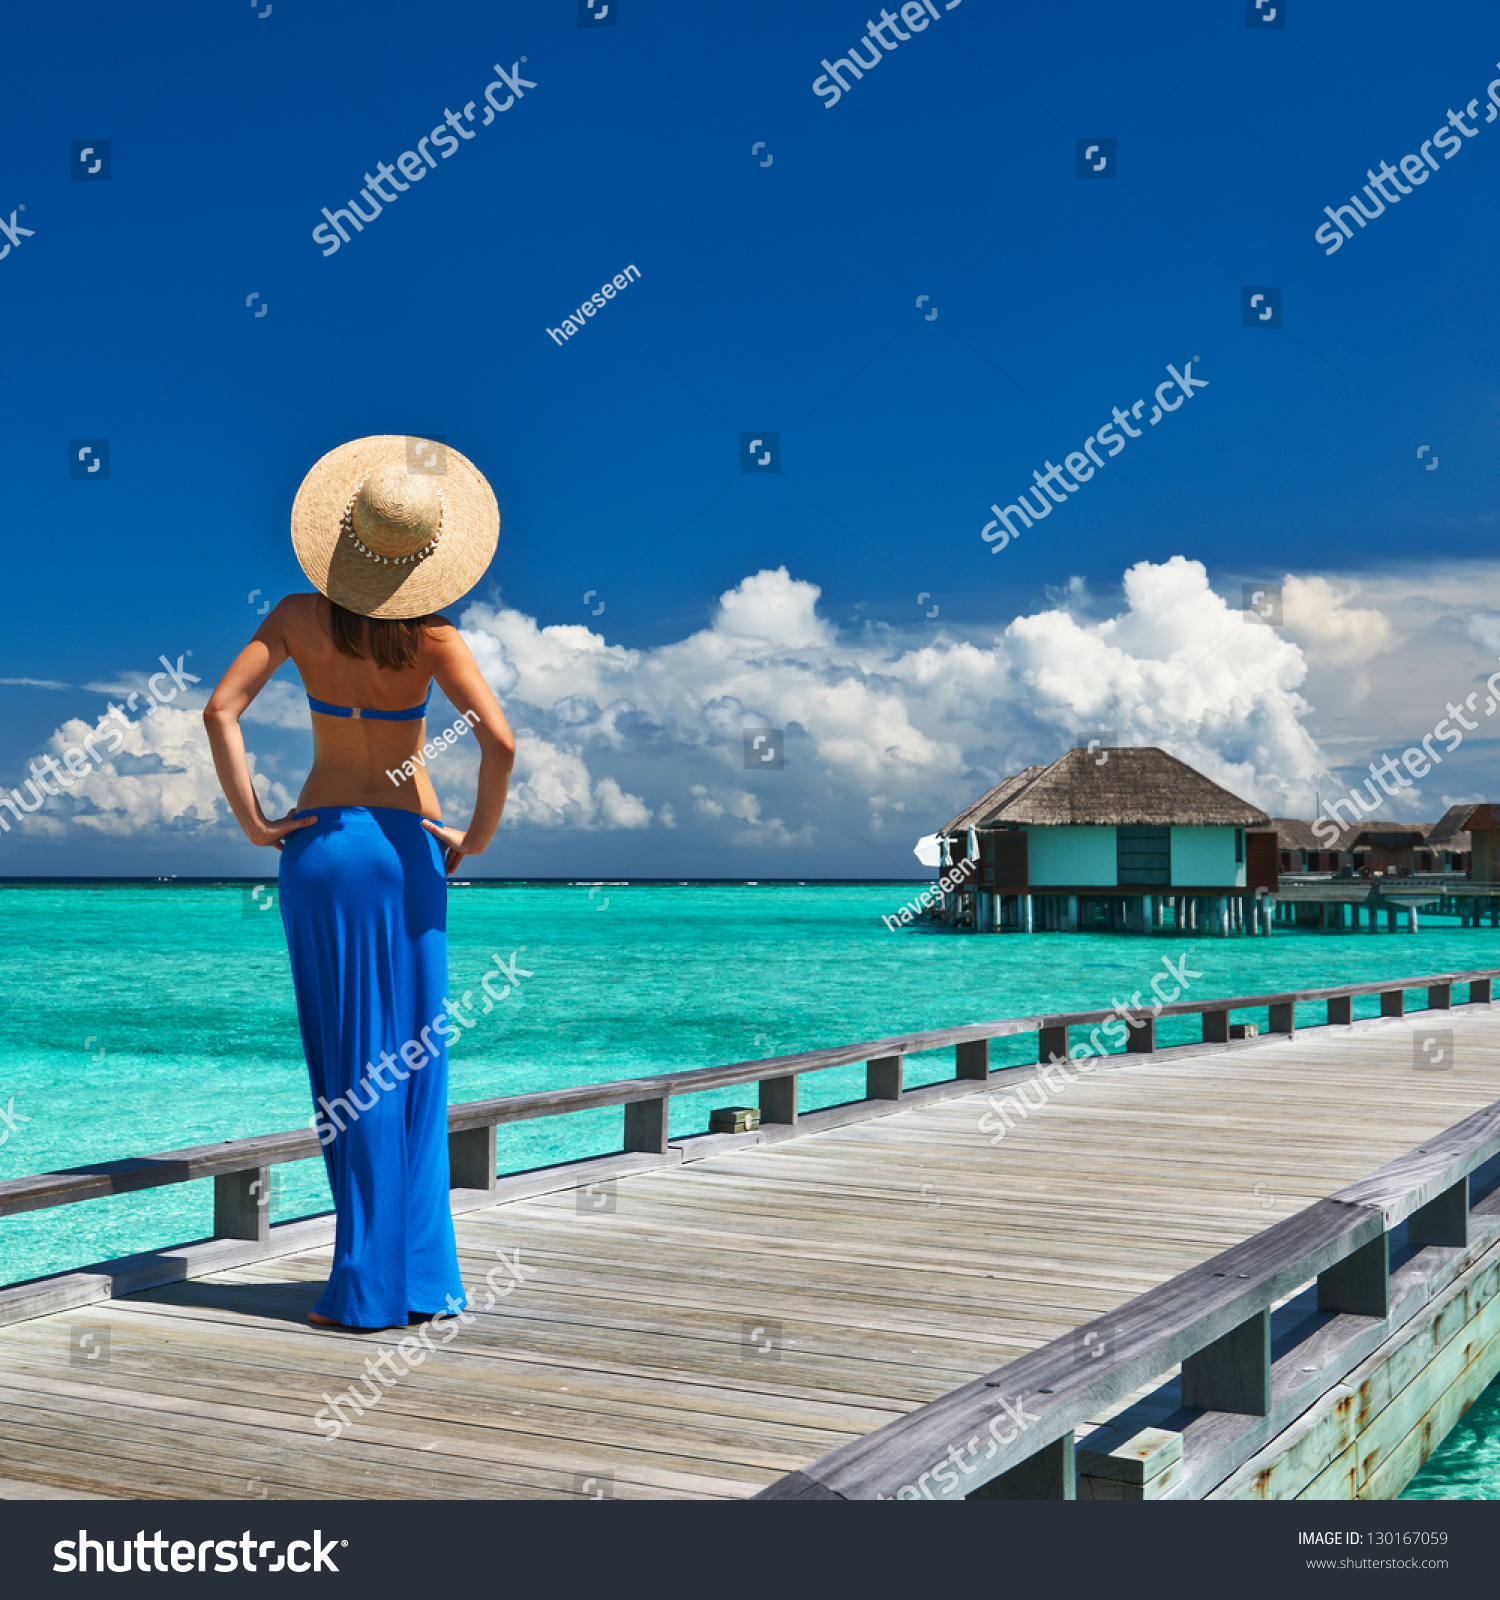 Woman on a tropical beach jetty at Maldives #130167059